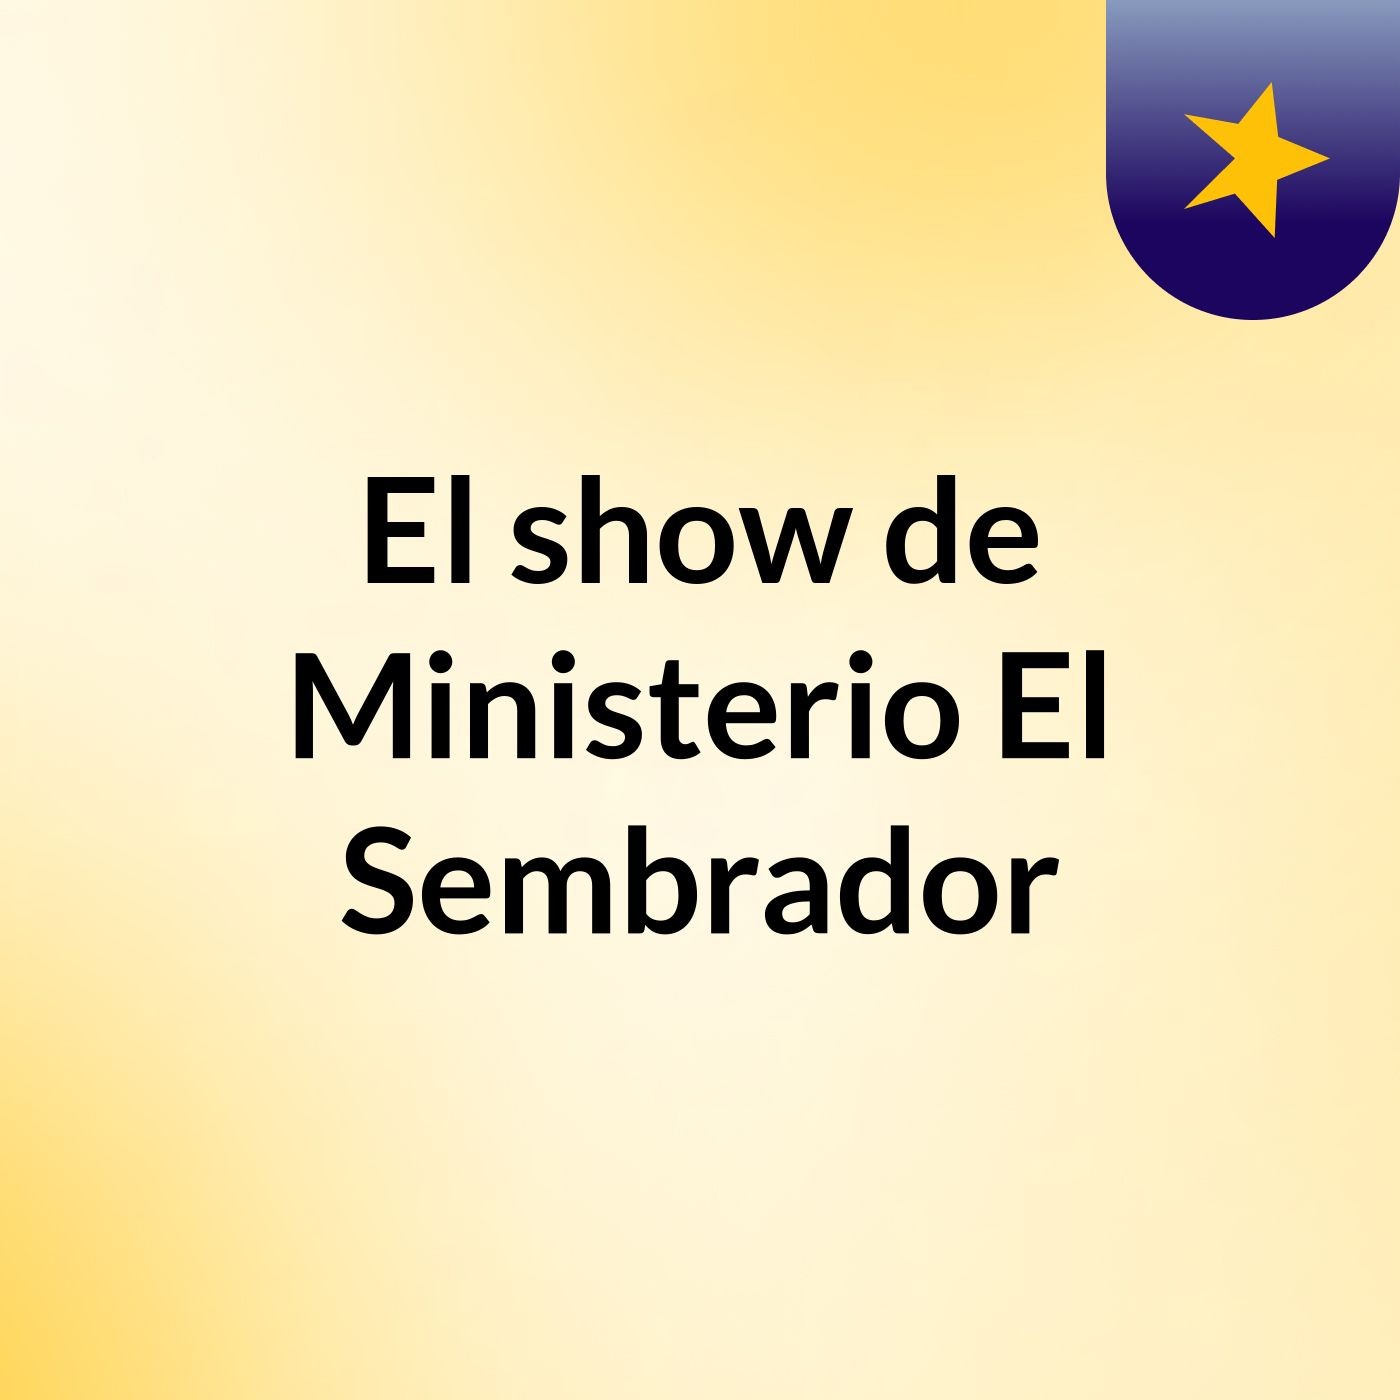 El show de Ministerio El Sembrador